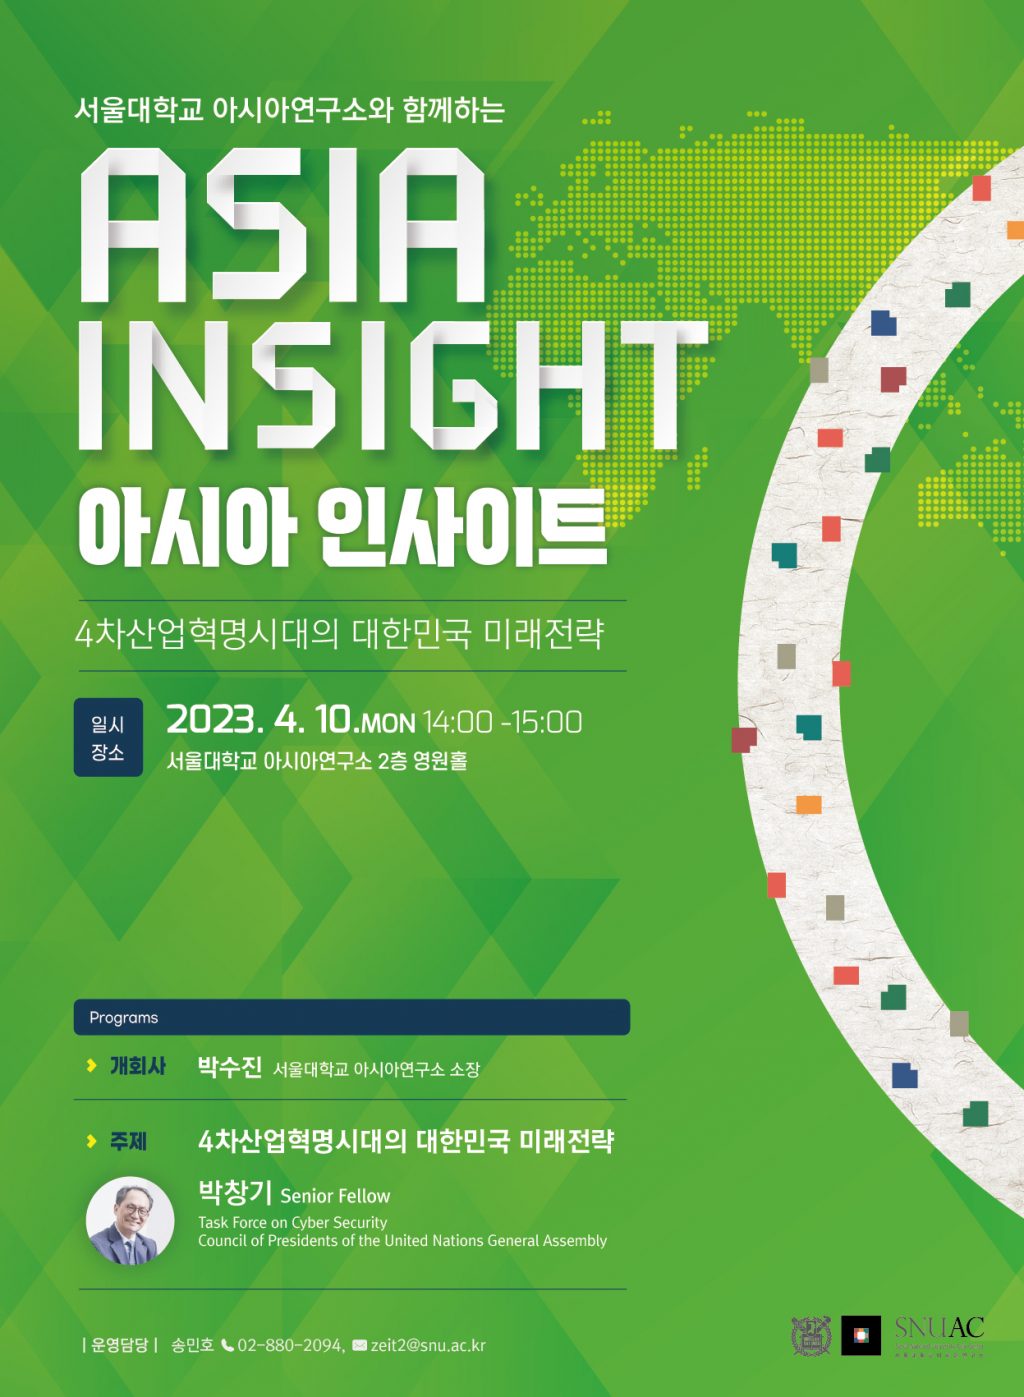 Korea’s Future Strategy in the Era of the 4th Industrial Revolution